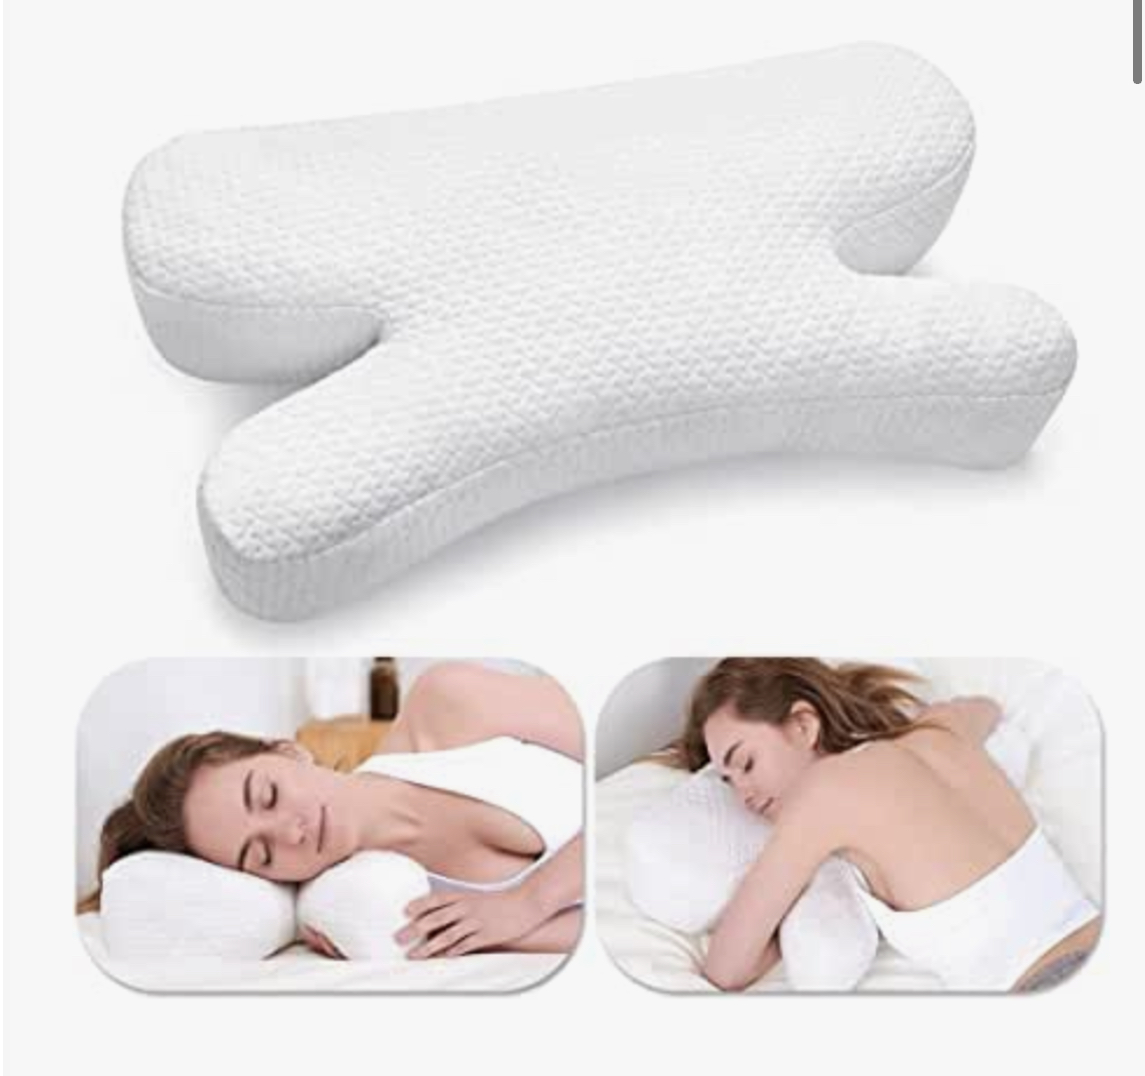 Anti wrinkle pillow